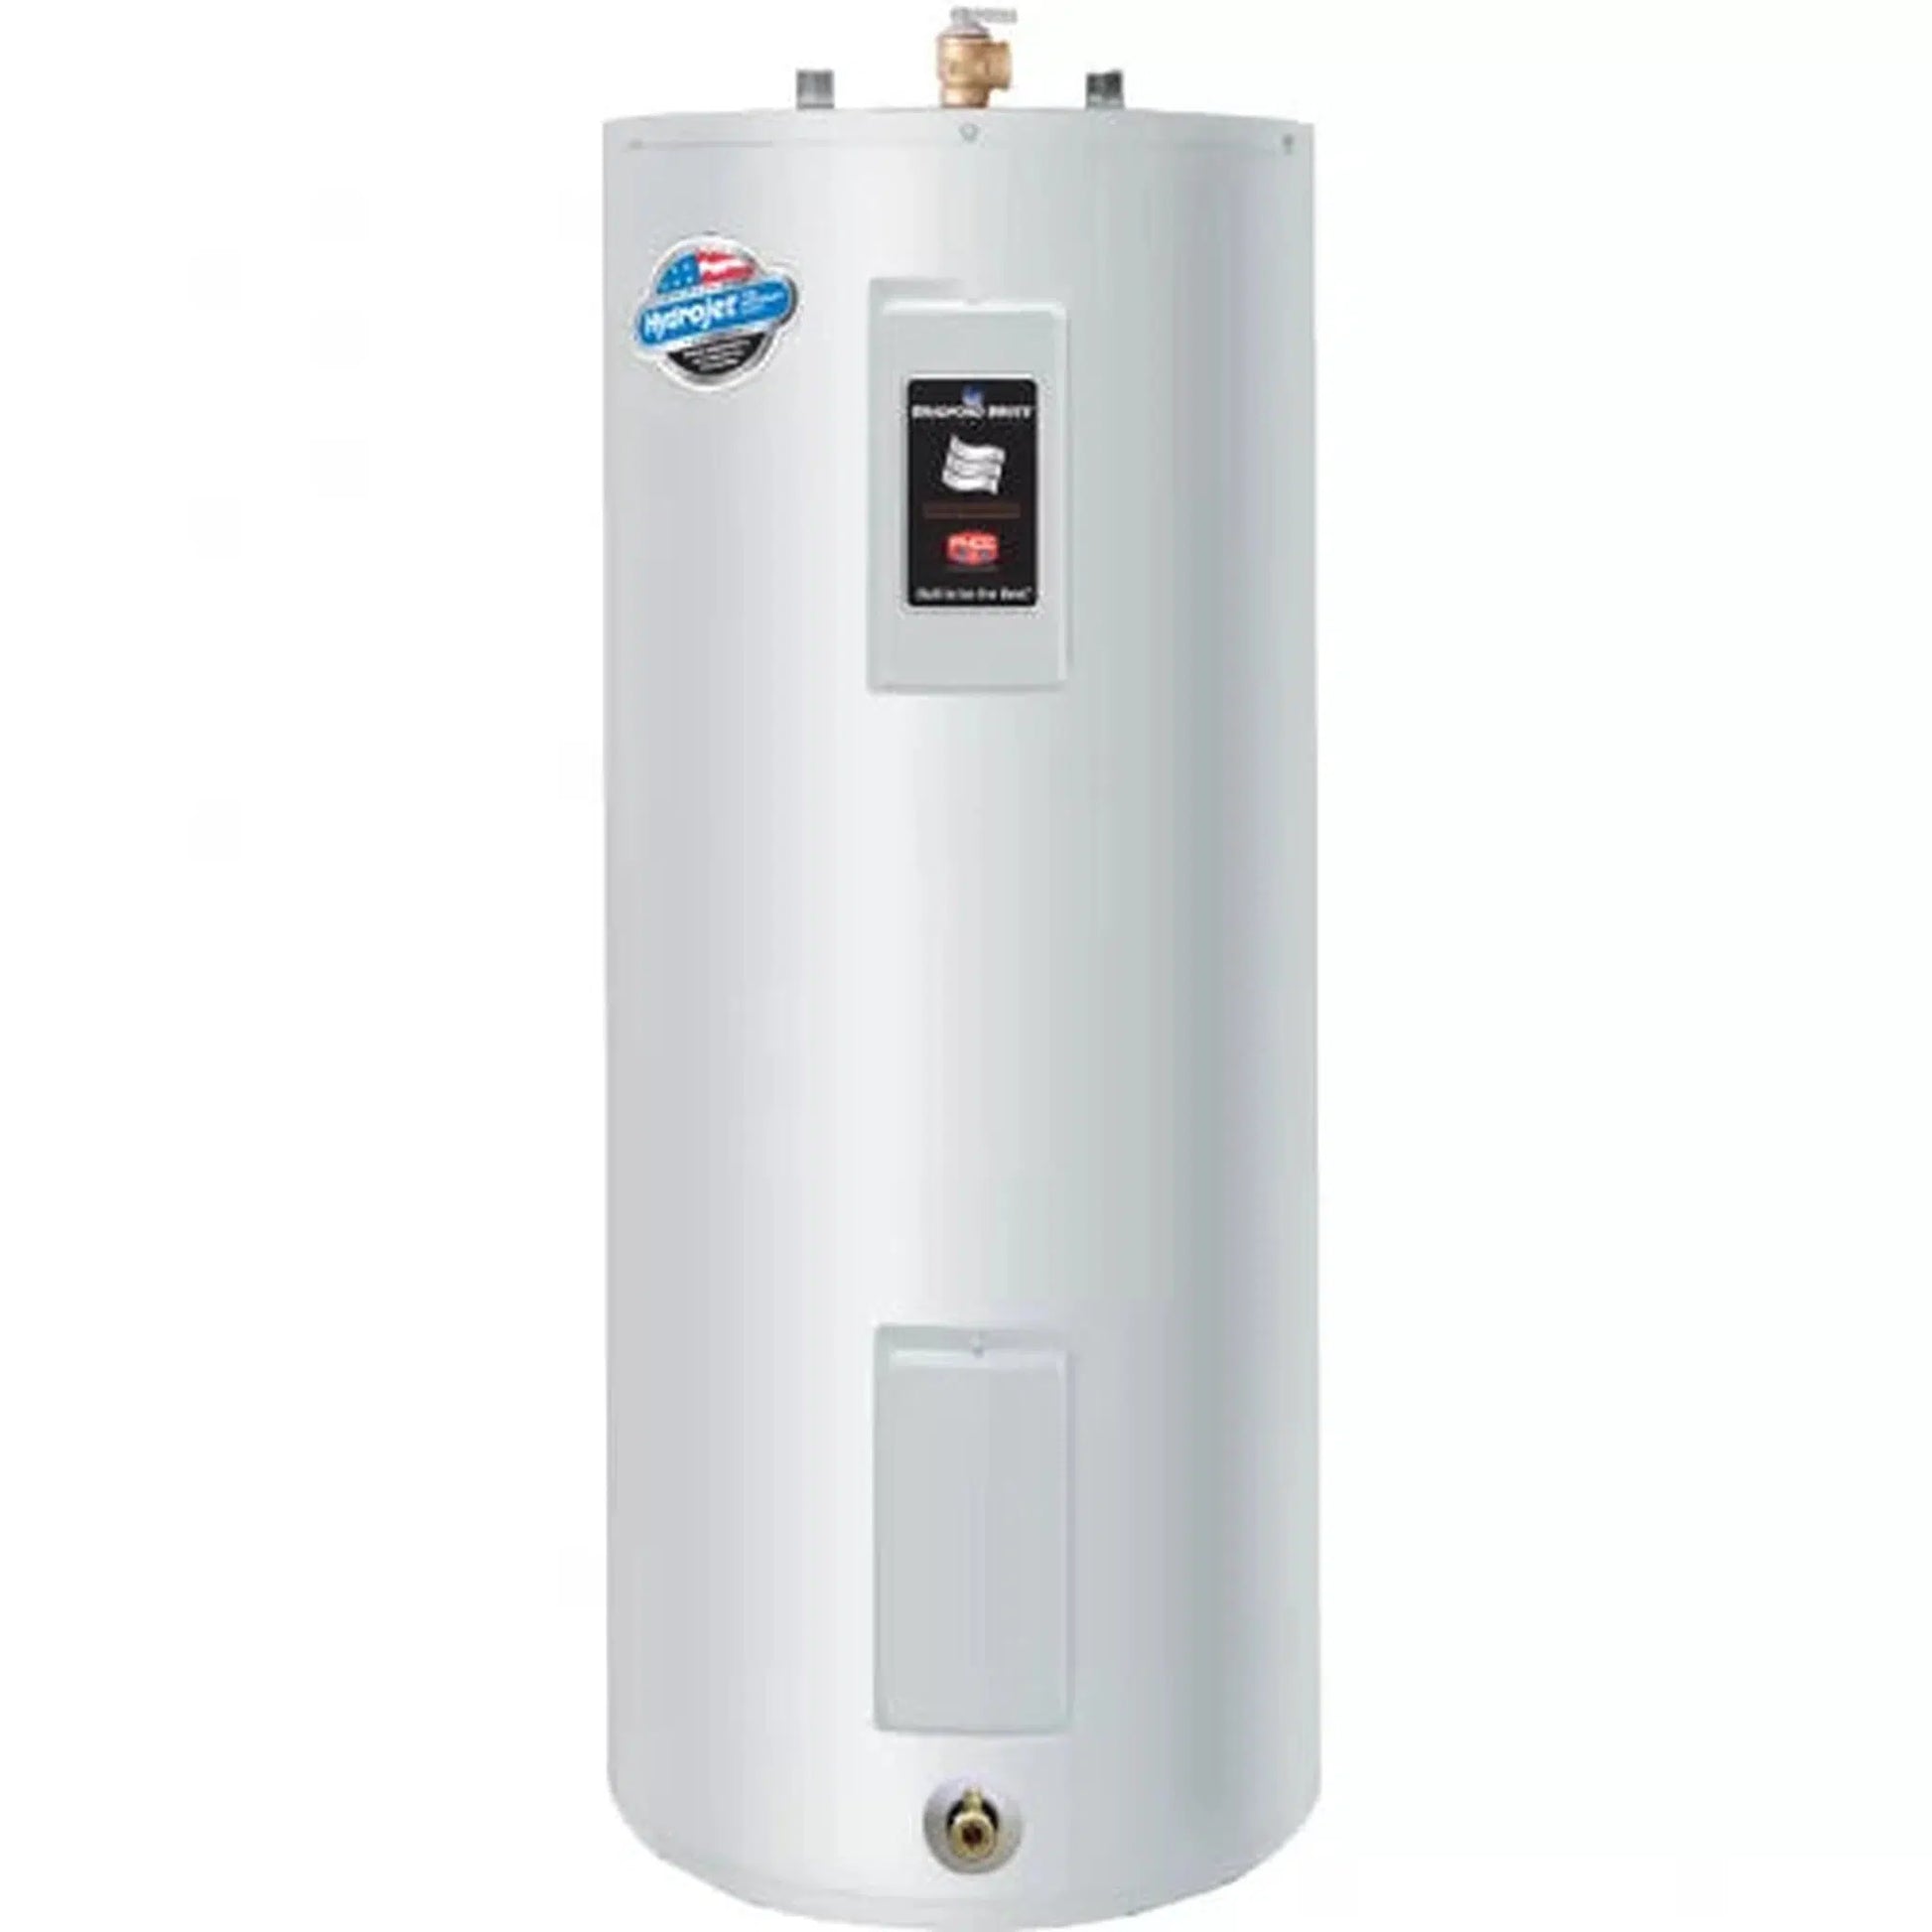 Bradford White RE250T6 240V 50 Gallon Capacity Electric Water Heater